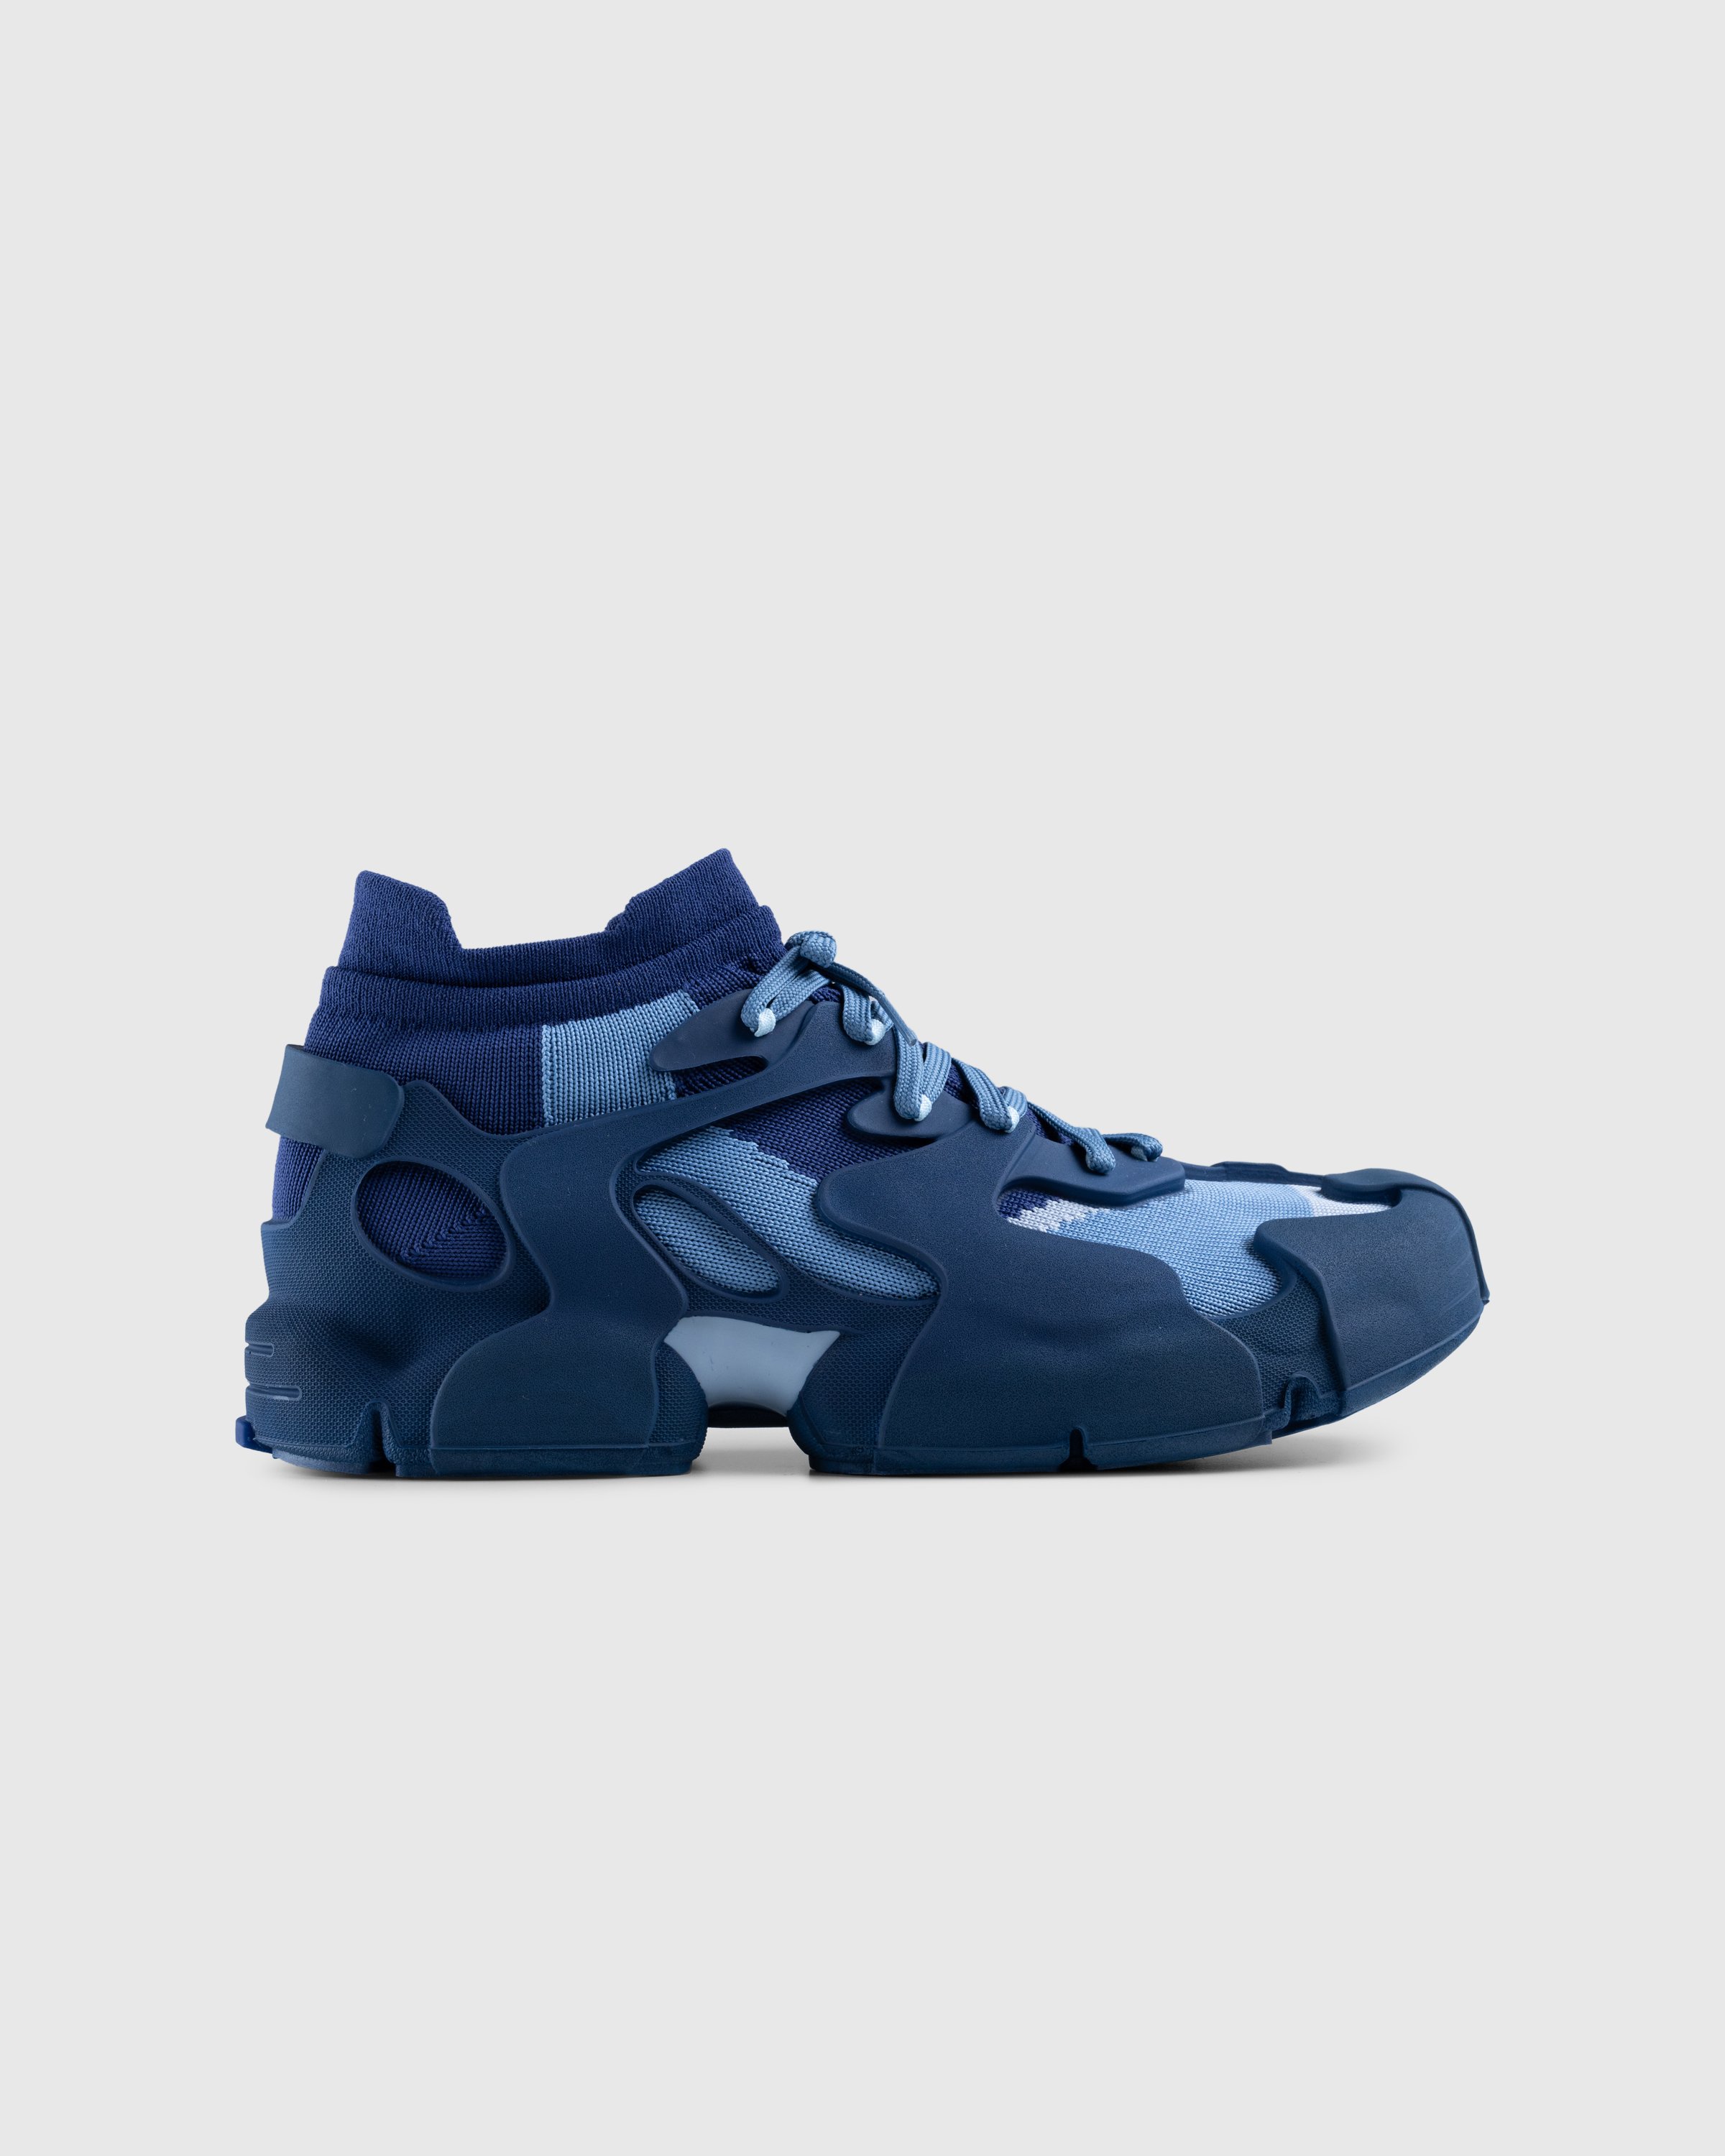 CAMPERLAB - Tossu Blue - Footwear - Multi - Image 1